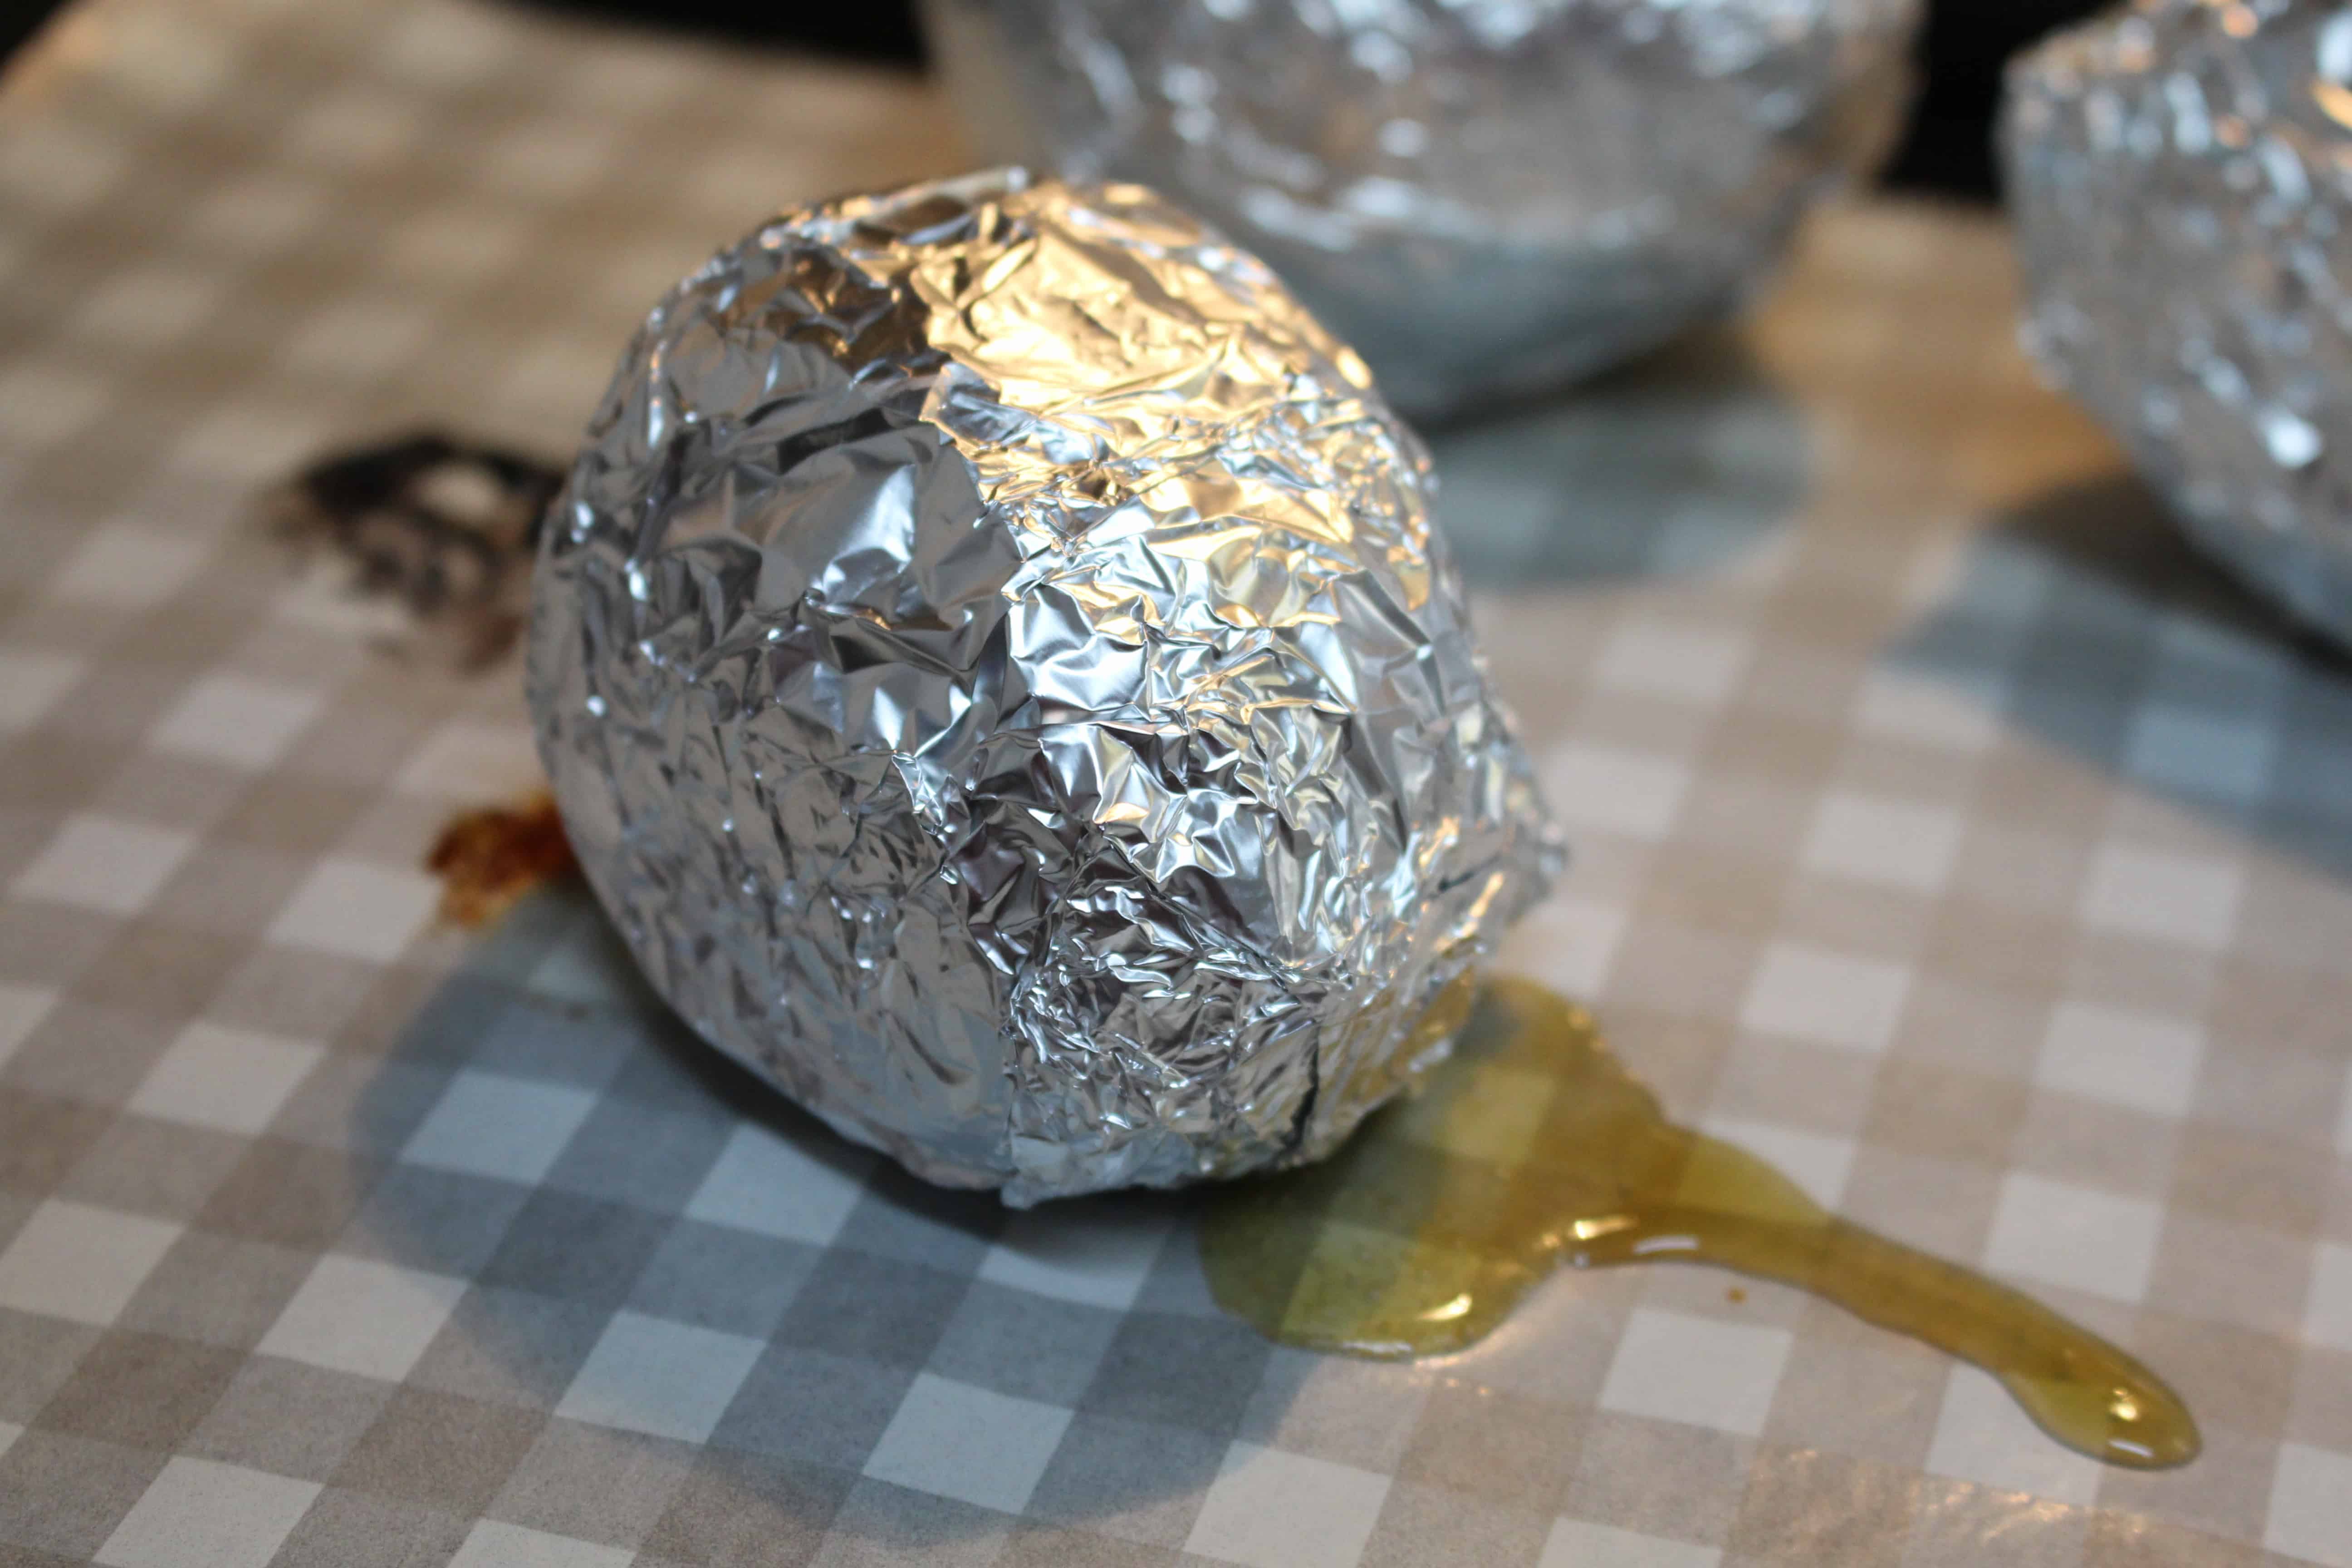 Annoimo sweet potato wrapped in aluminum foil